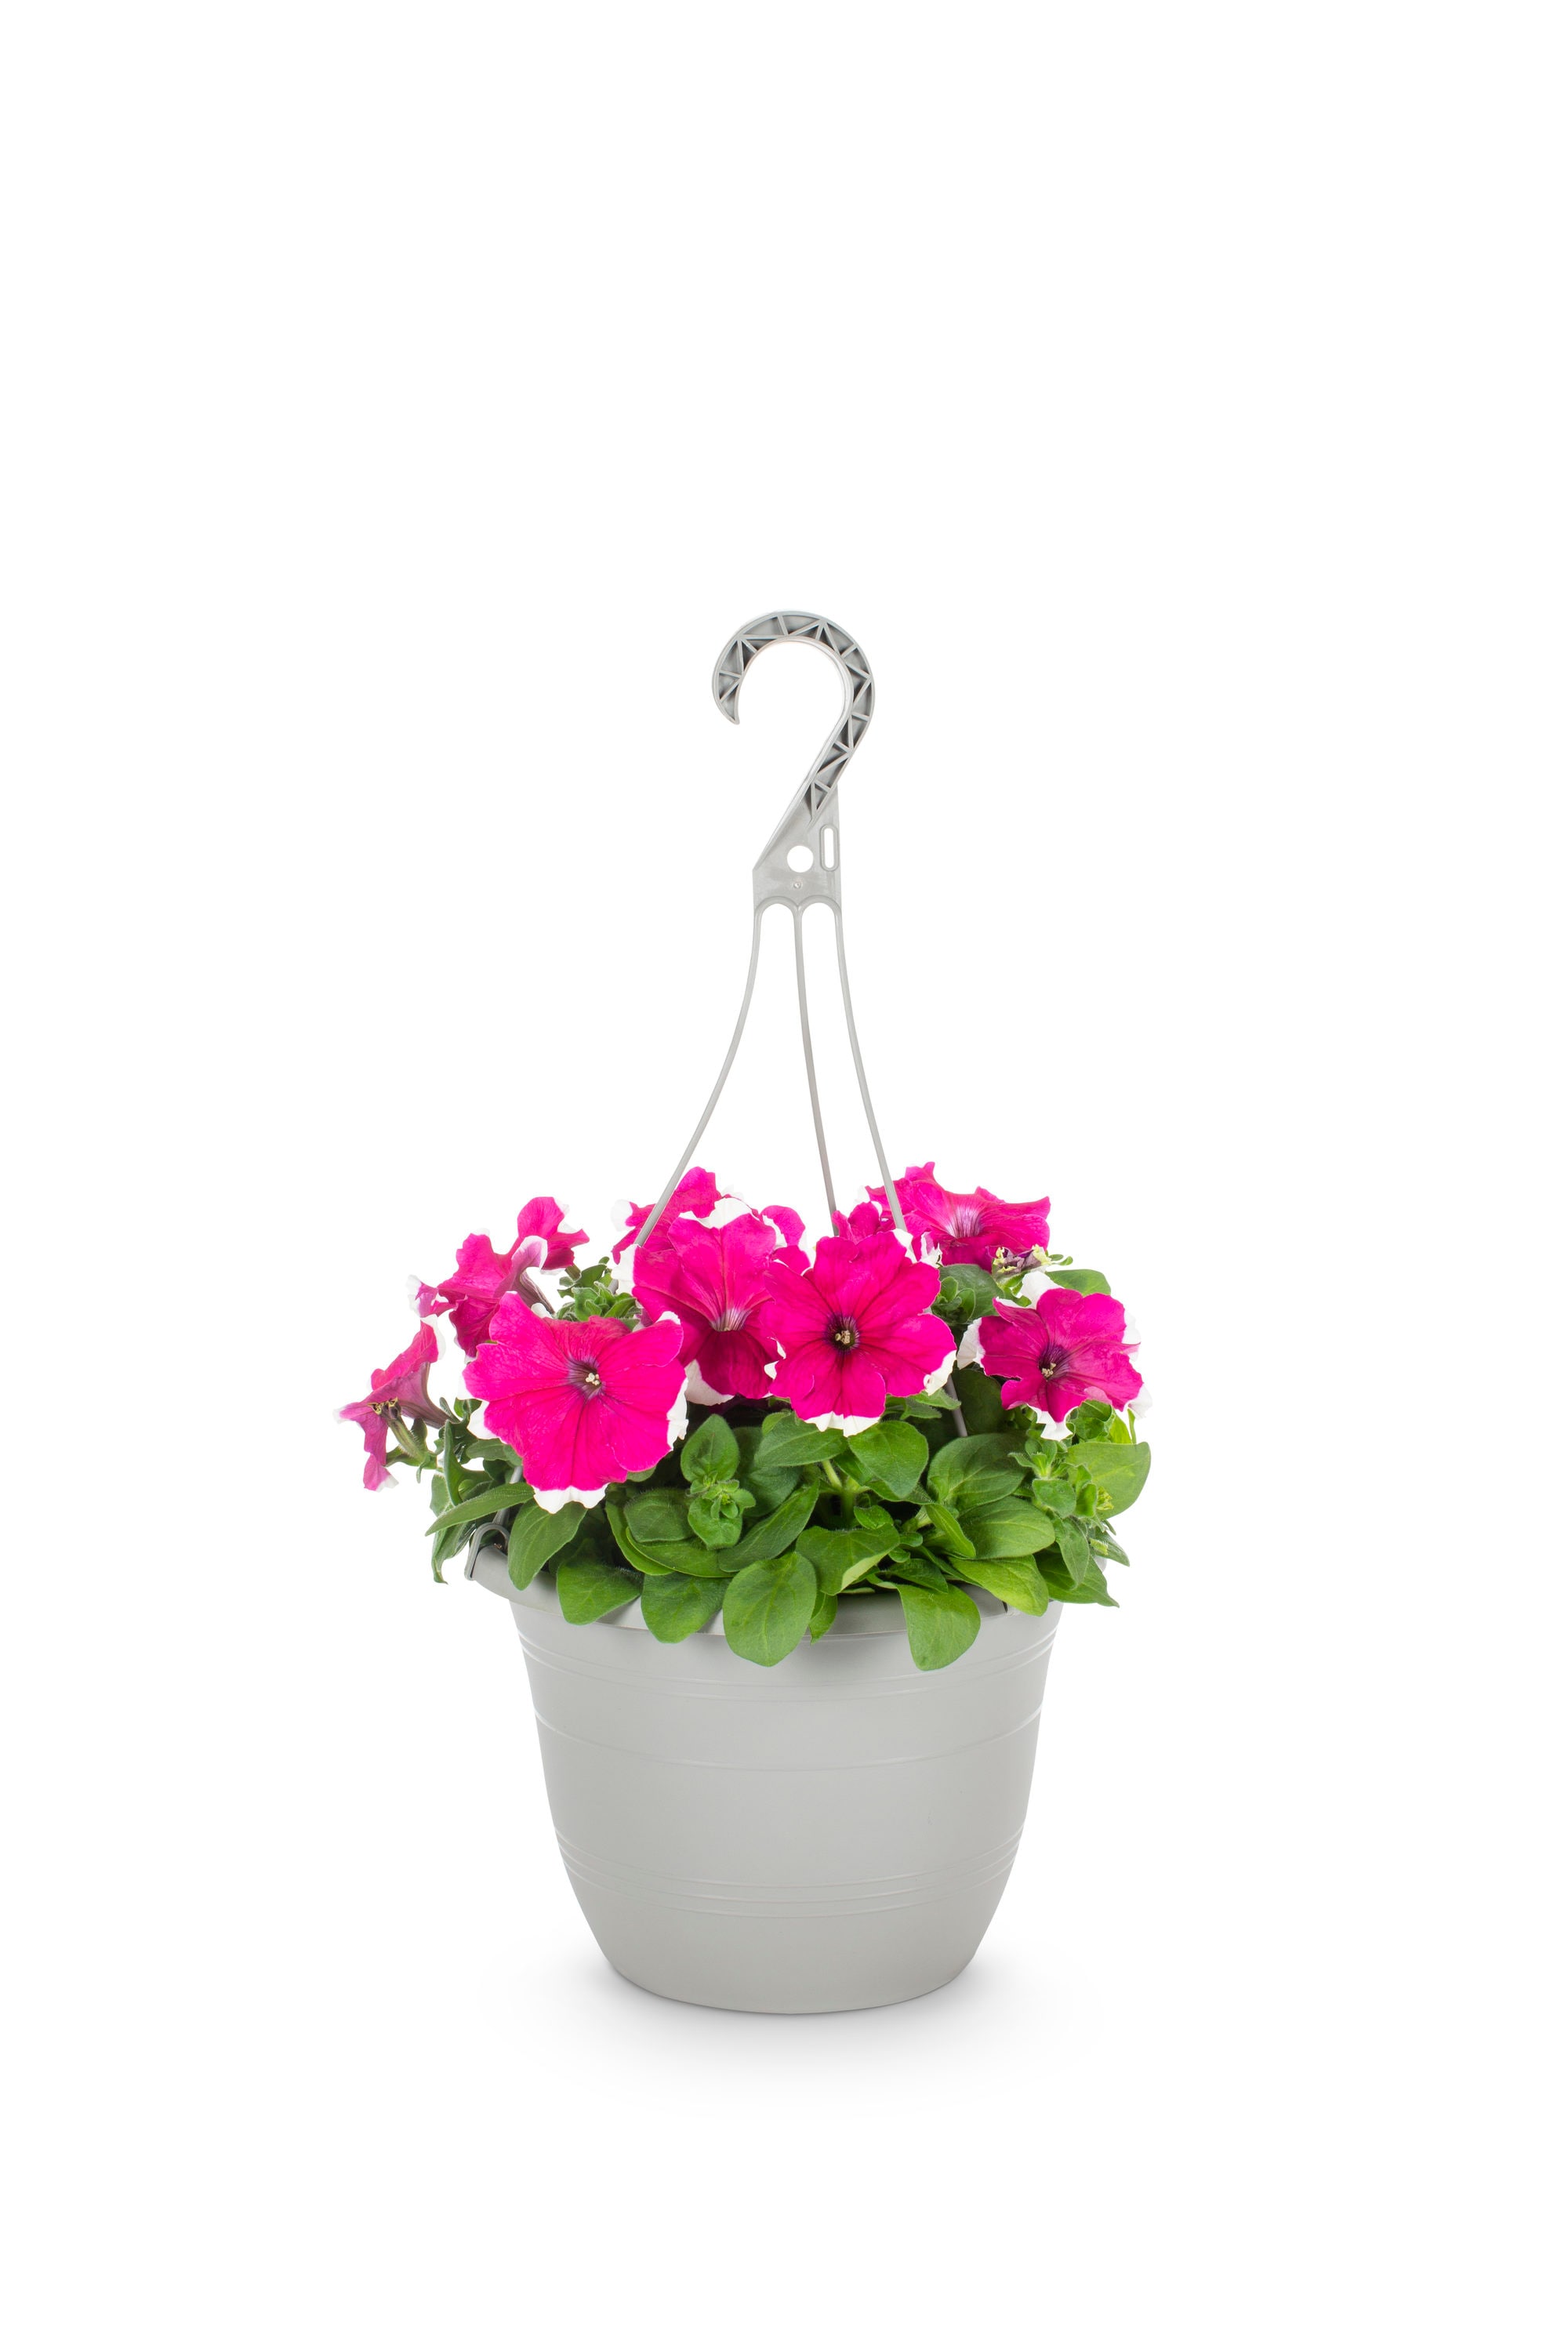 Image of Petunia hanging plant